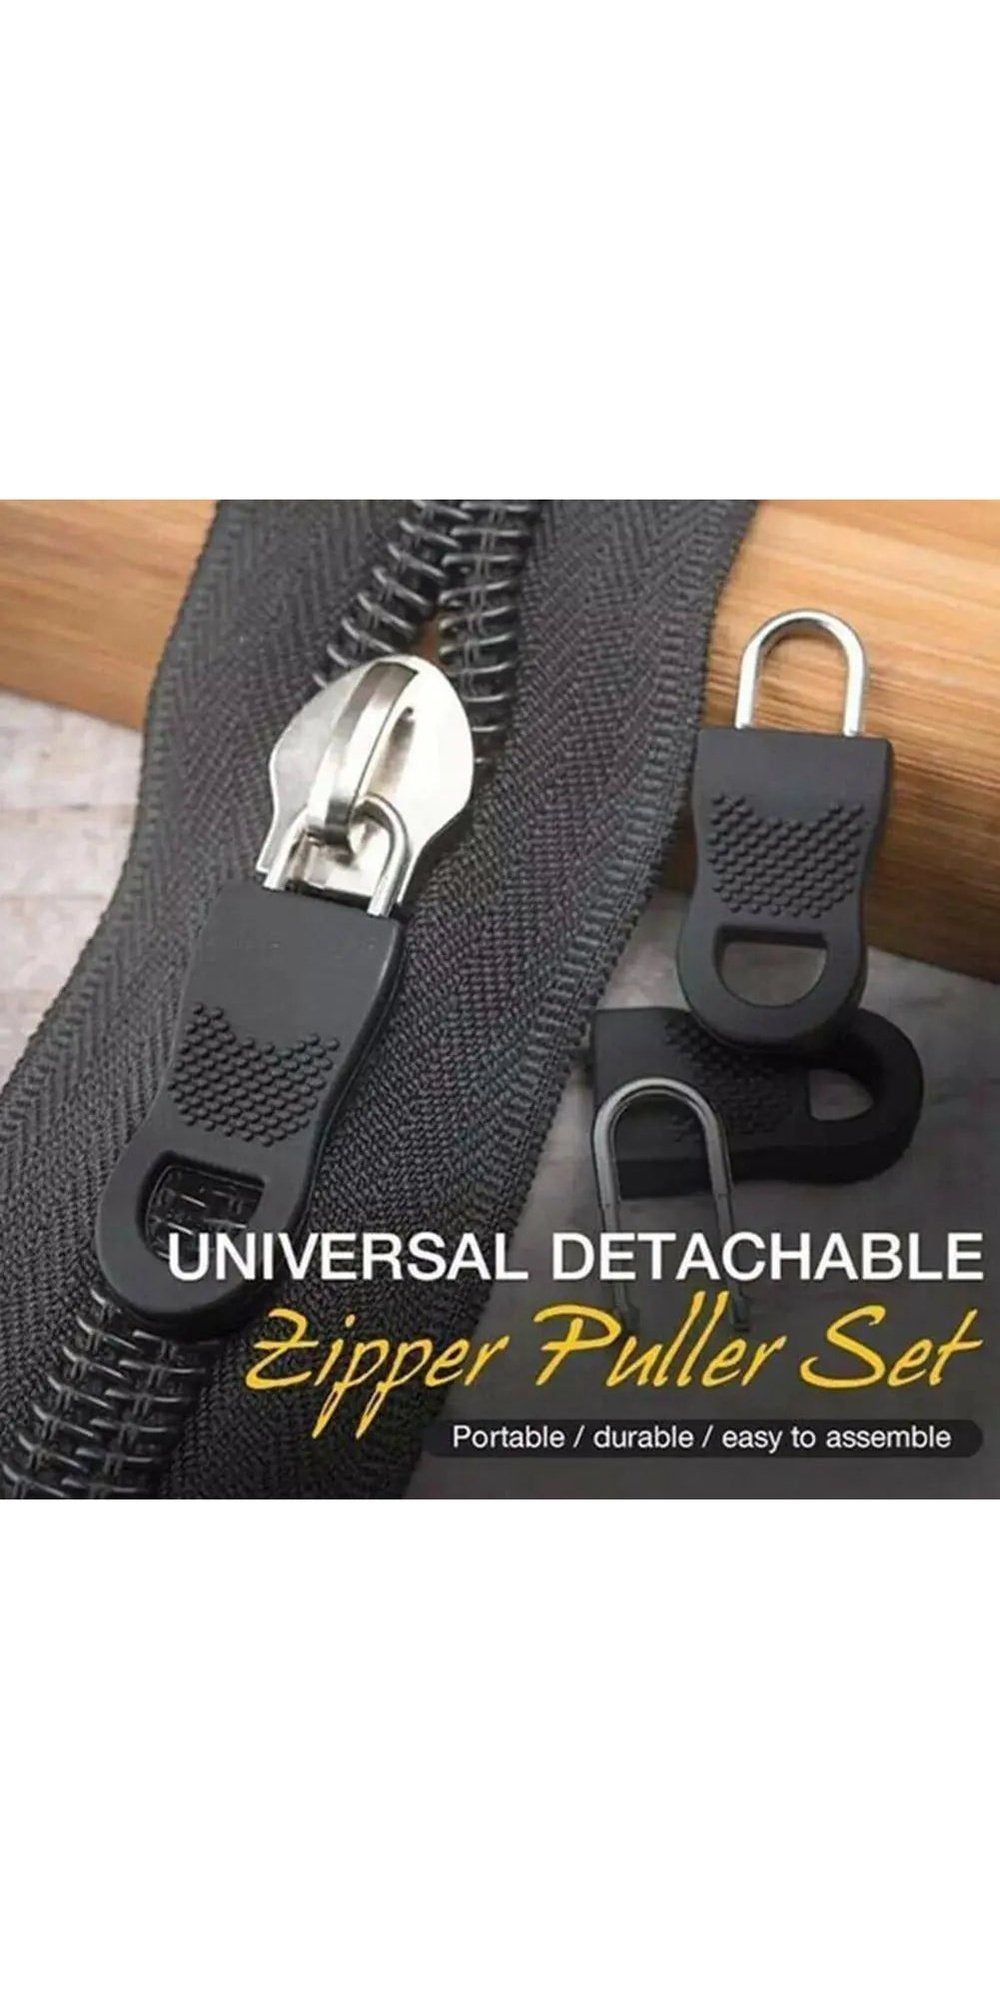 Universal Zipper Repair Kit Zipper Lock Sliding Teeth Rescue Zipper Head Repair Replacement Tools for Clothes Bagpack Bag Z7Q2